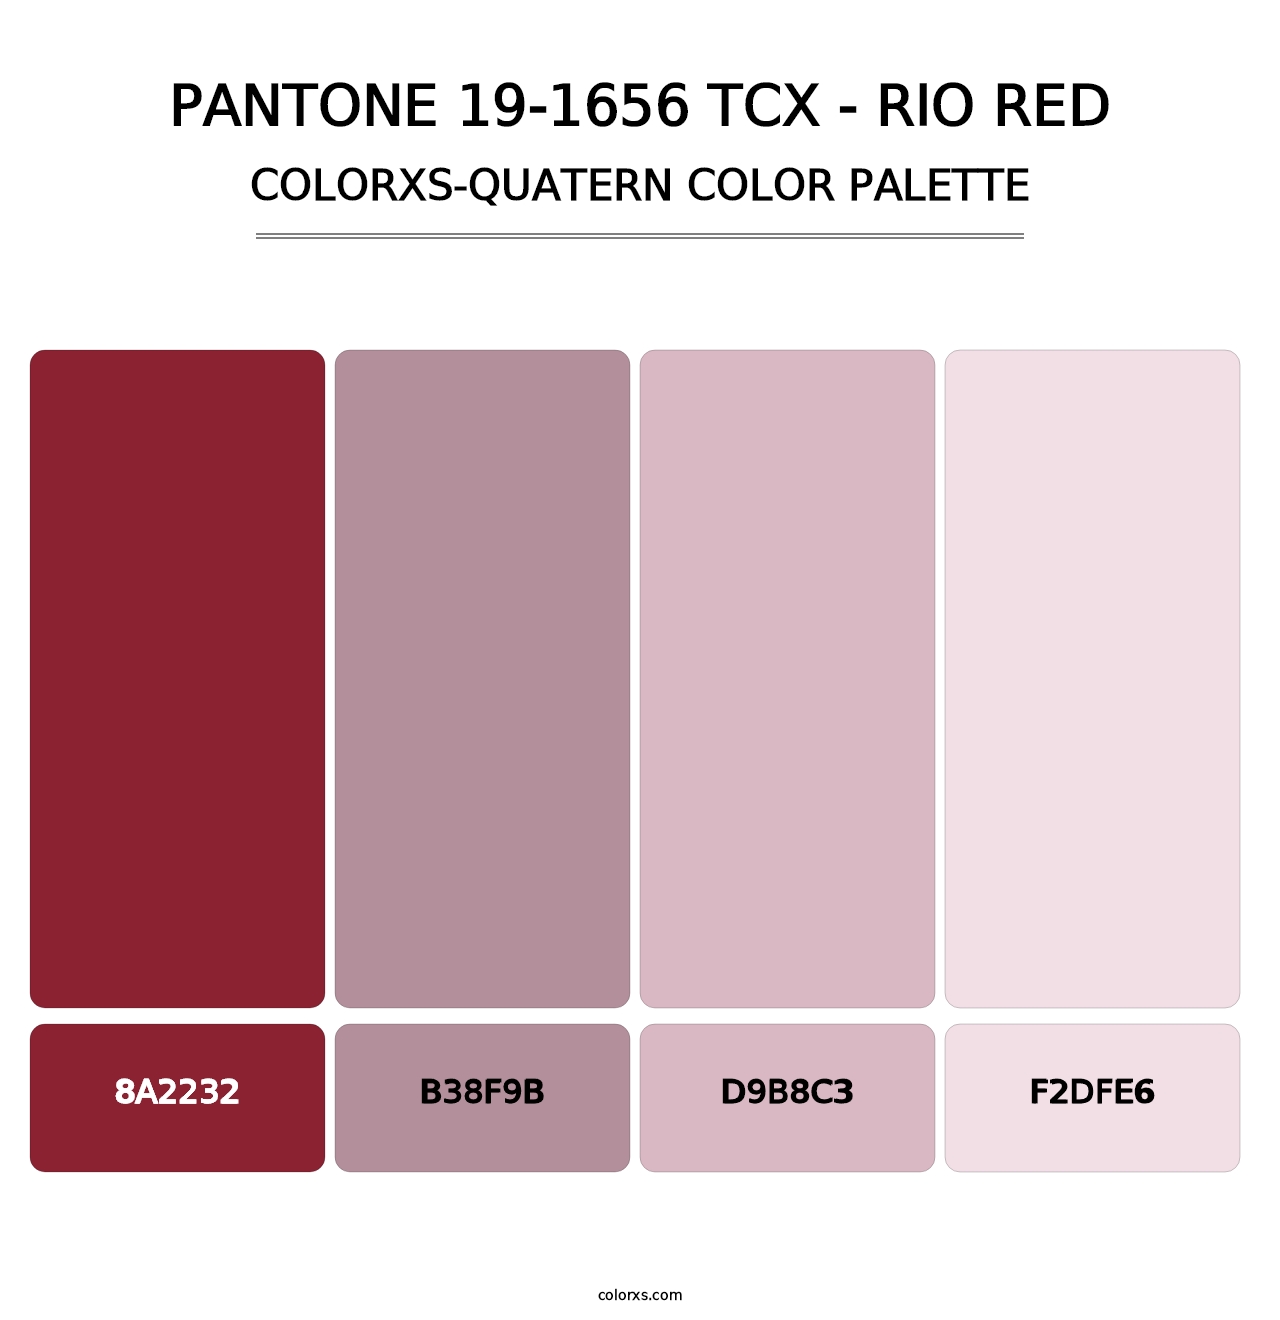 PANTONE 19-1656 TCX - Rio Red - Colorxs Quatern Palette